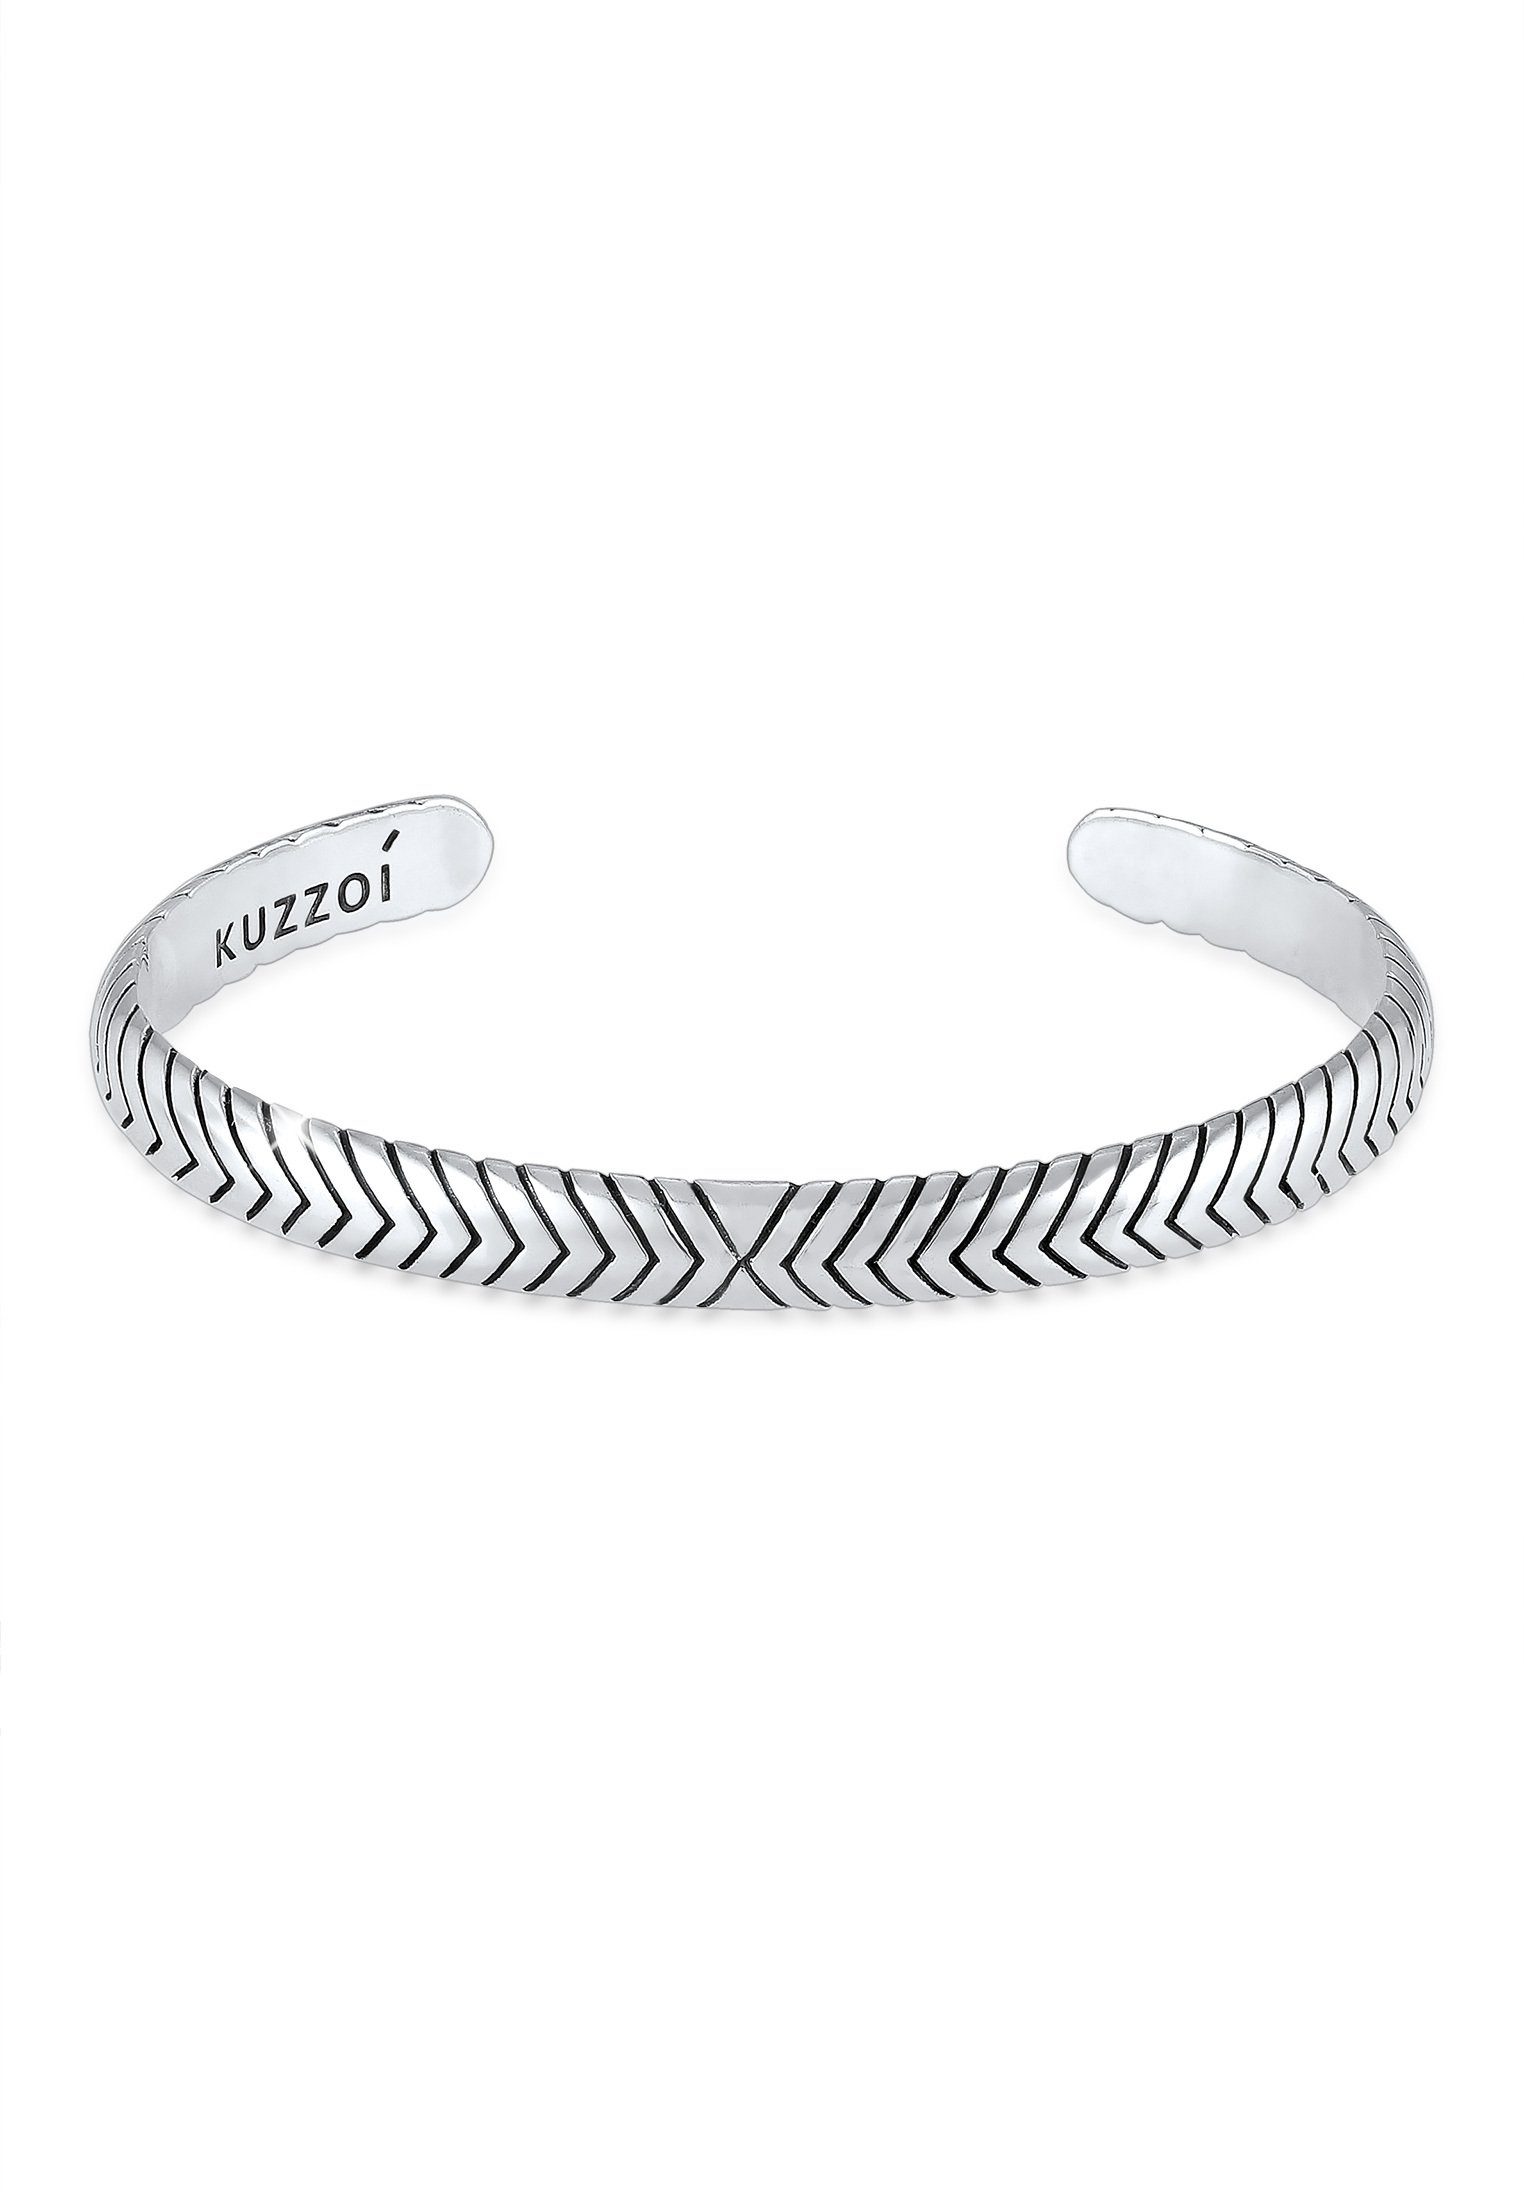 Kuzzoi Armband Herren Armreif Oxidiert Verstellbar 925 Silber, Modischer  Armreif im trendigen Design für Herren